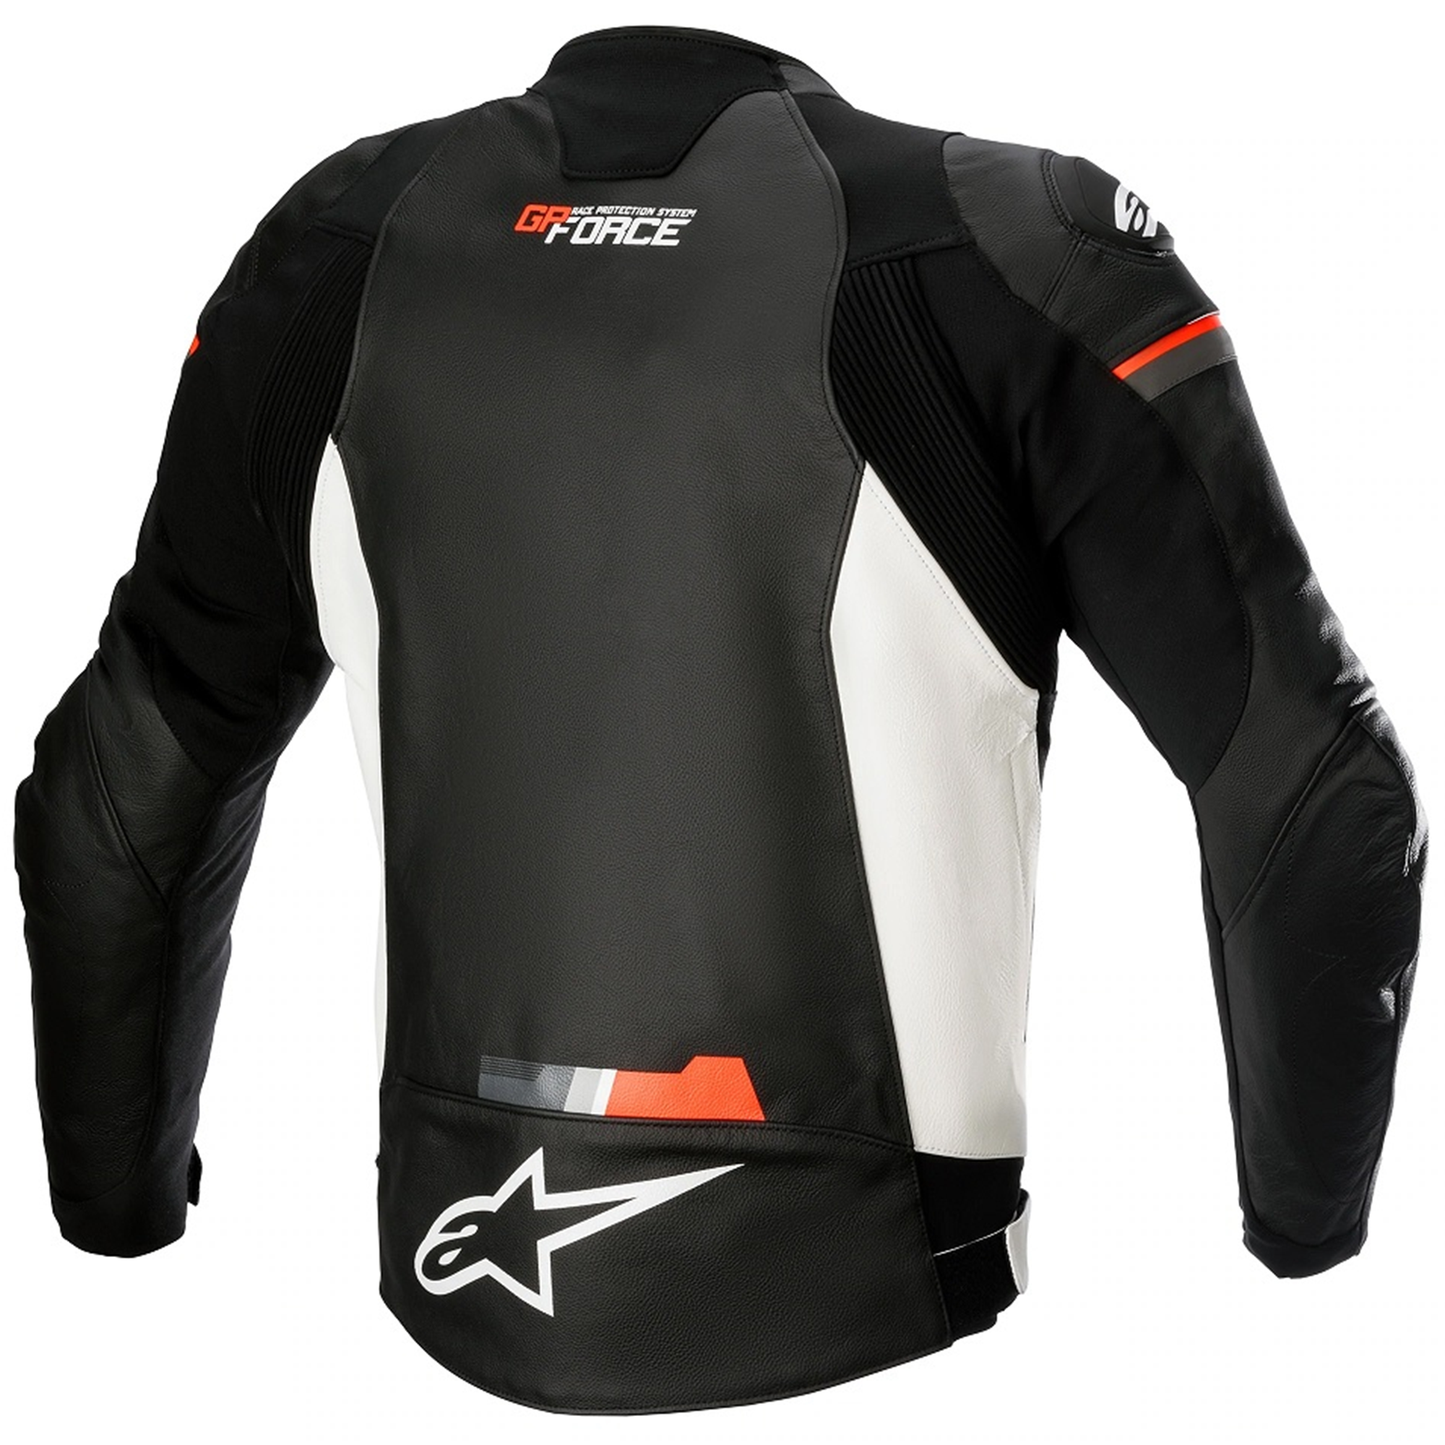 Alpinestars GP Force Leather Jacket - Black/White/Red Flo